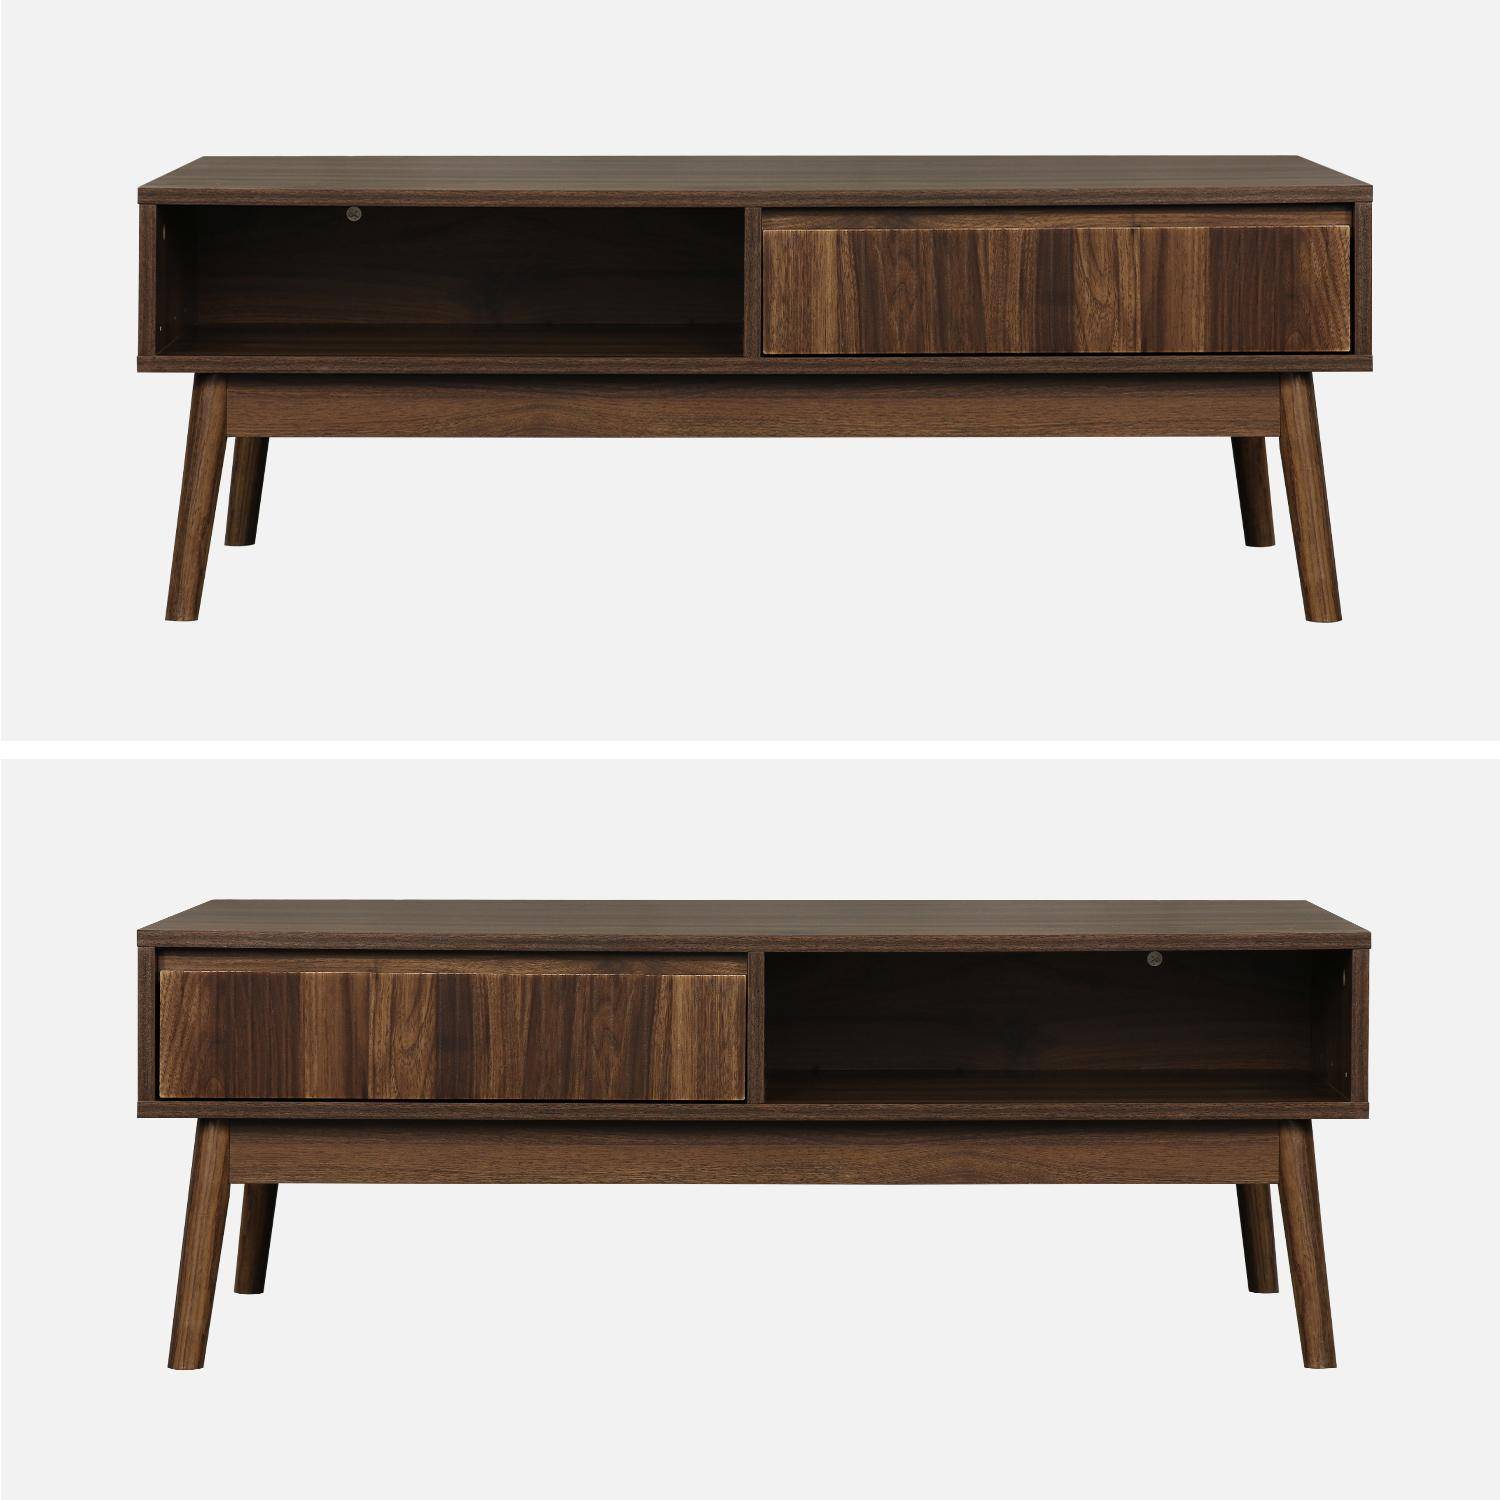 Wooden coffee table with one drawer storage, dark wood, L110xW59xH39cm Photo5